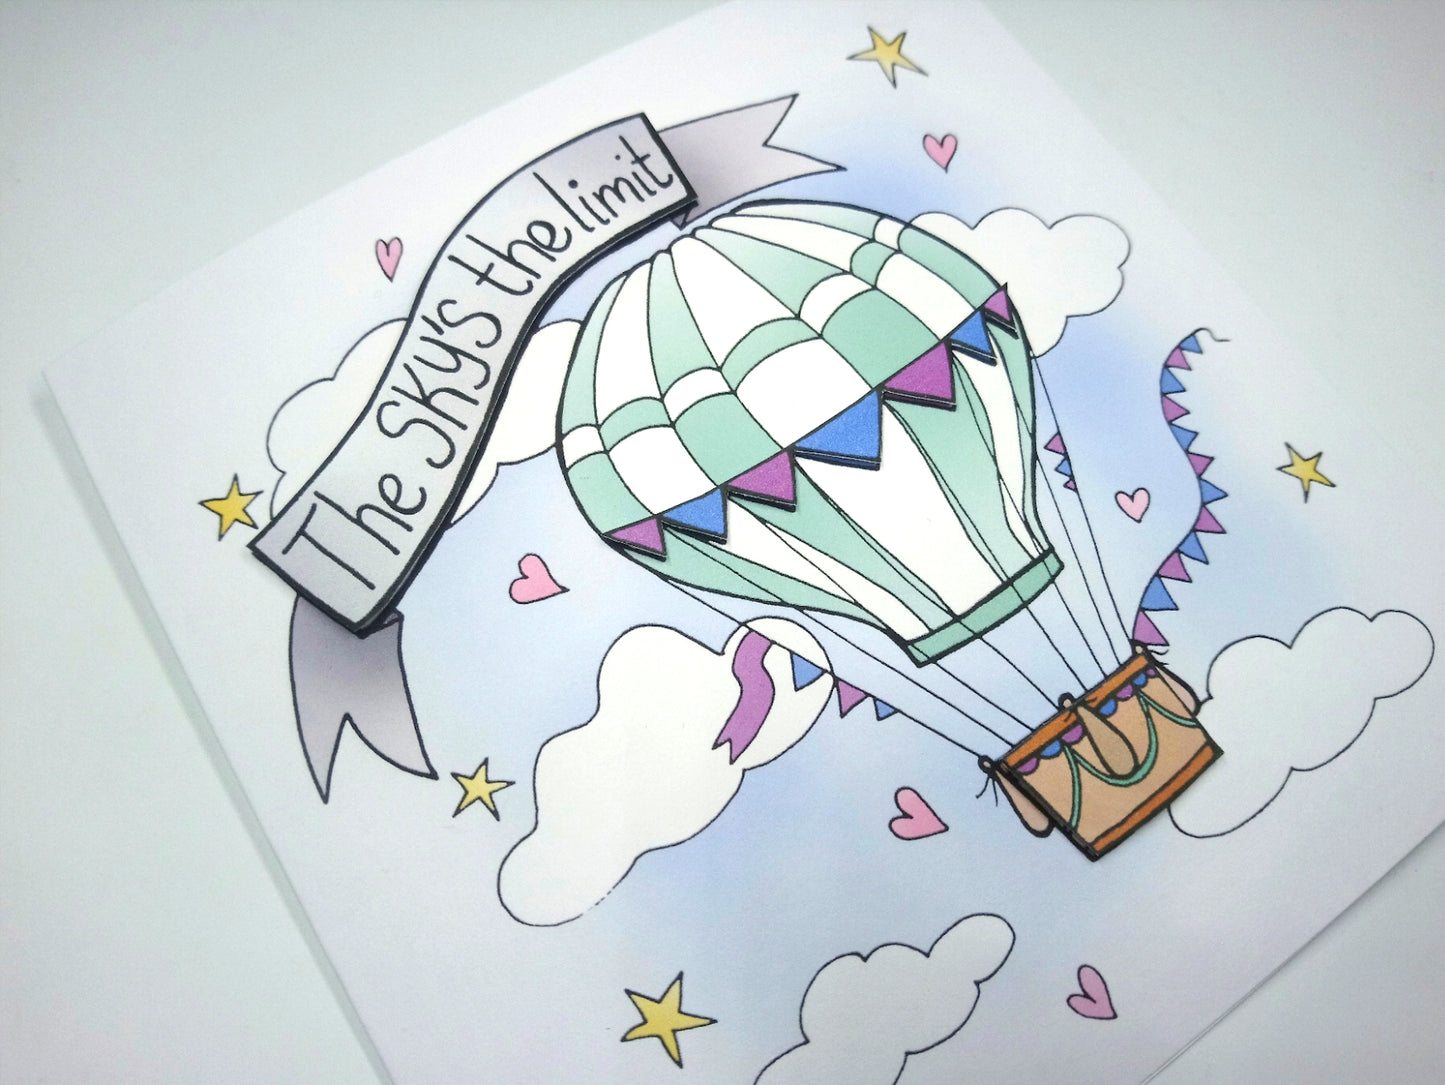 Air balloon the sky's the limit Card